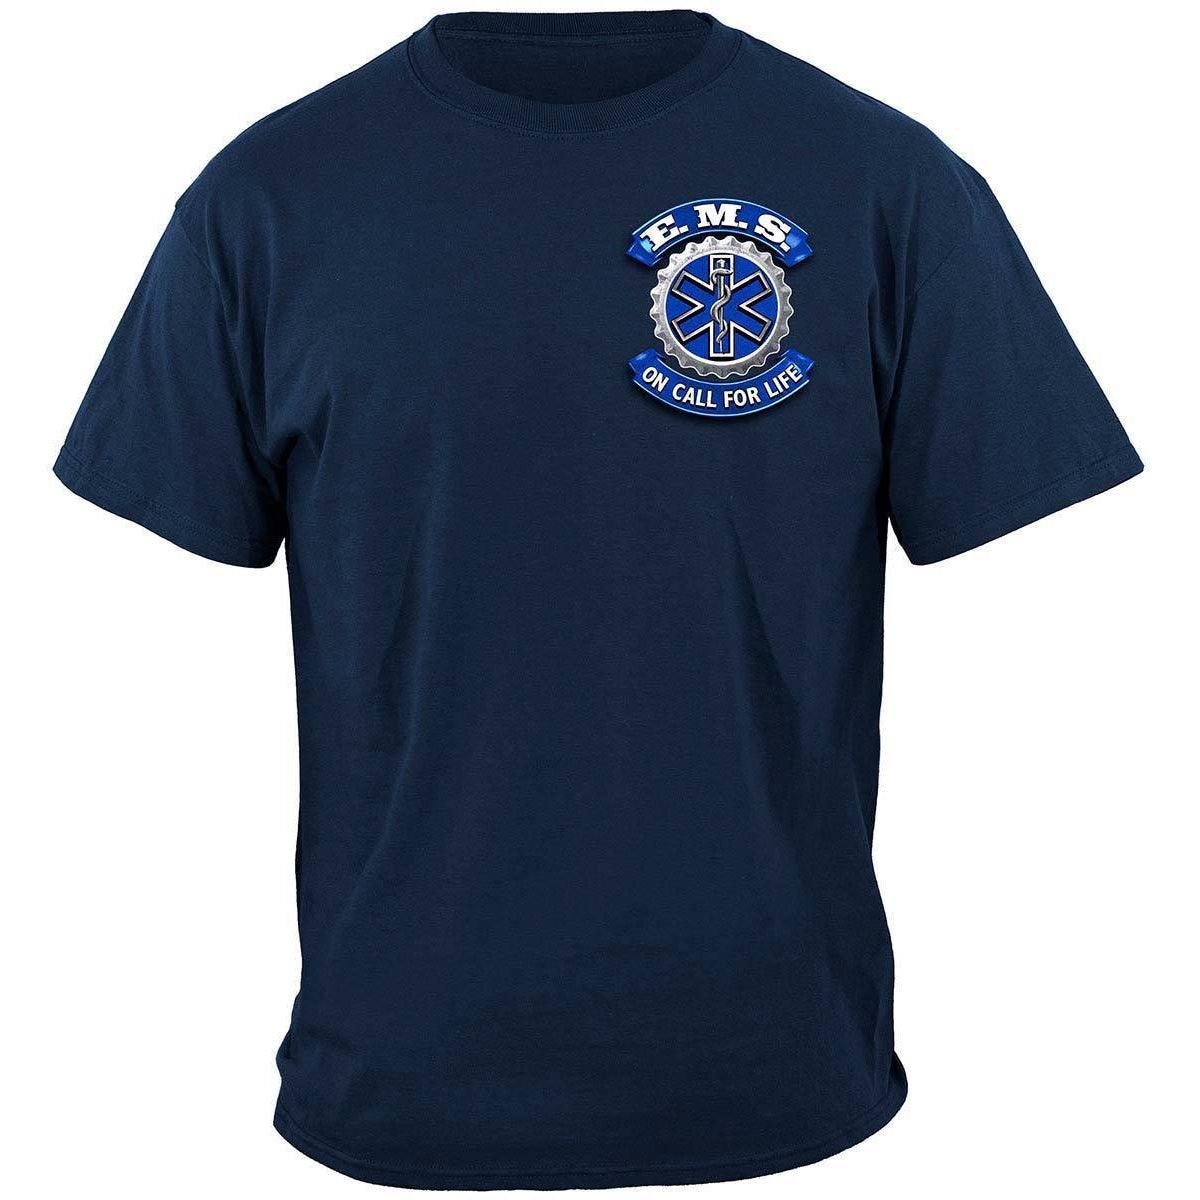 EMS Beer Label Premium T-Shirt - Military Republic